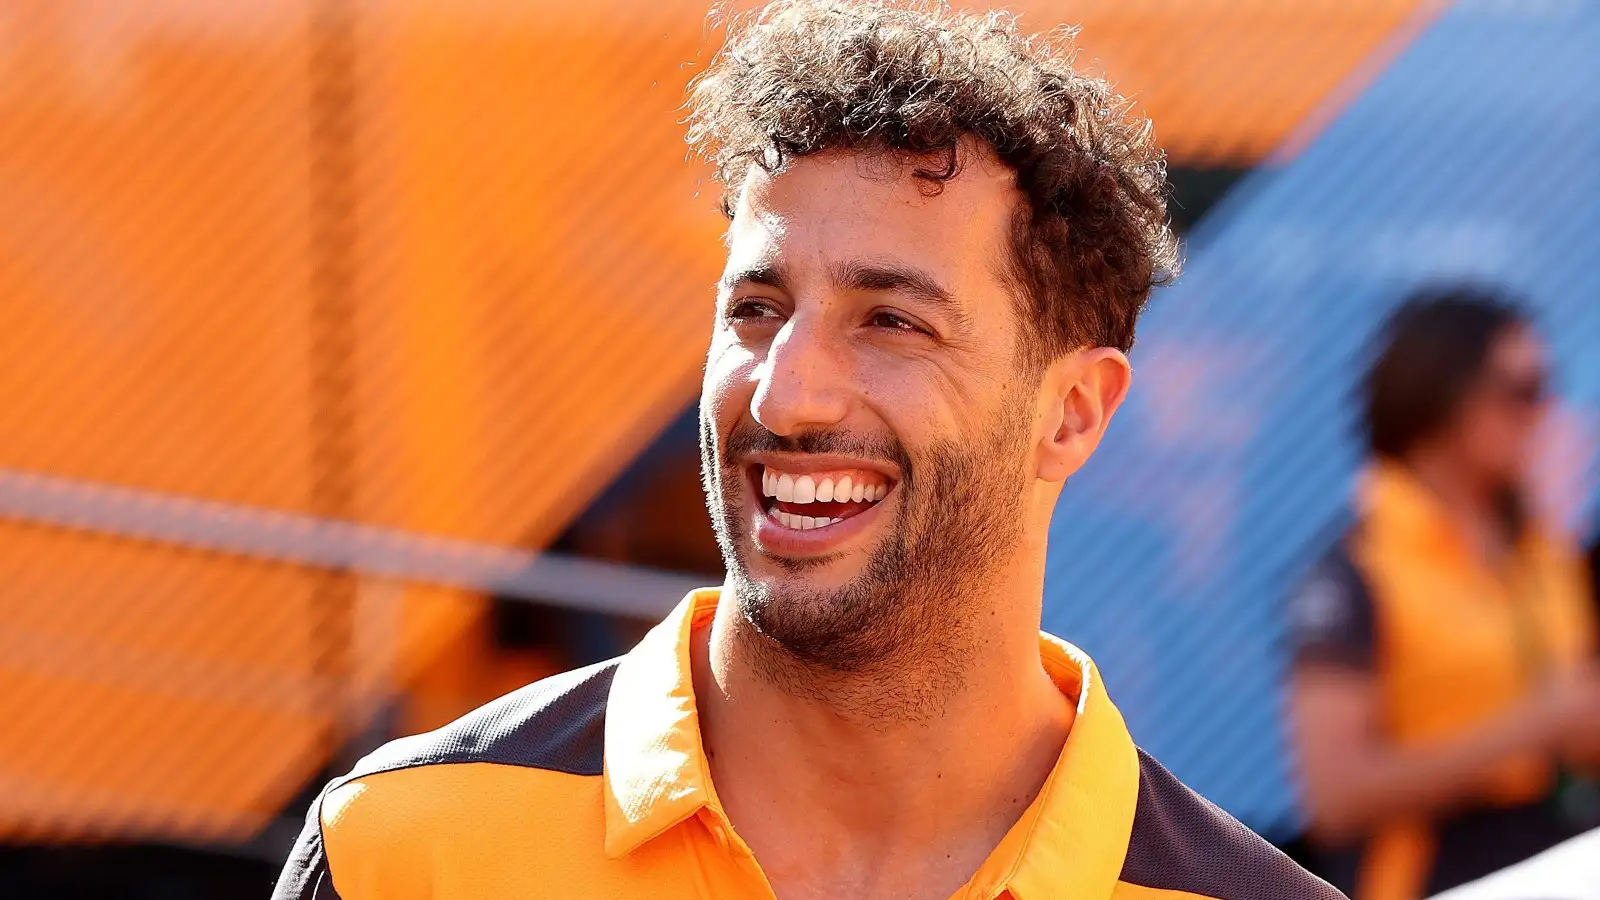 Daniel Ricciardo smiling in the paddock in front of the McLaren motorhome. Spain May 2022